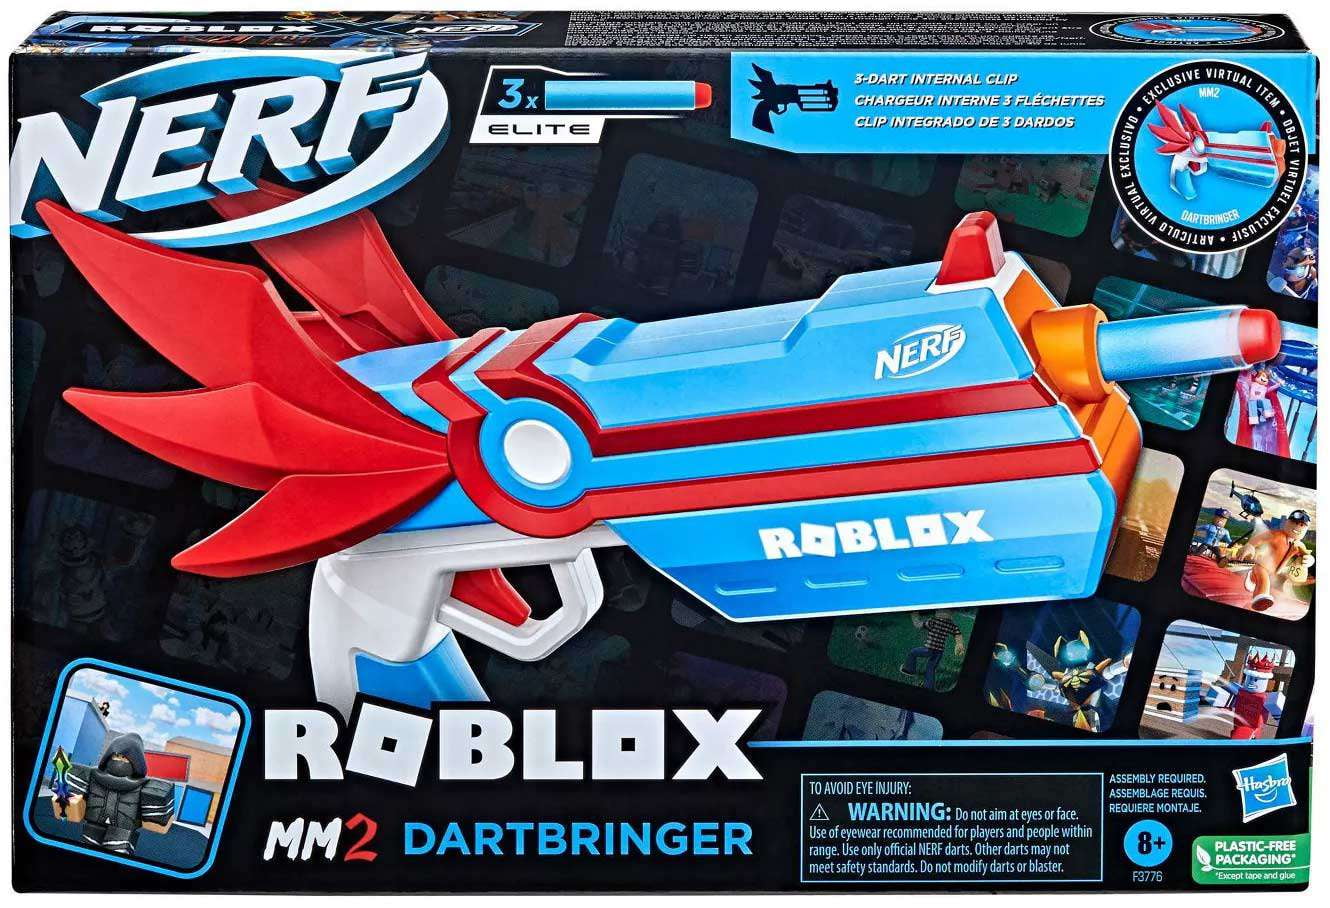 Nerf Roblox Mm2: Dartbringer Dart Blaster – Toys R Us Australia